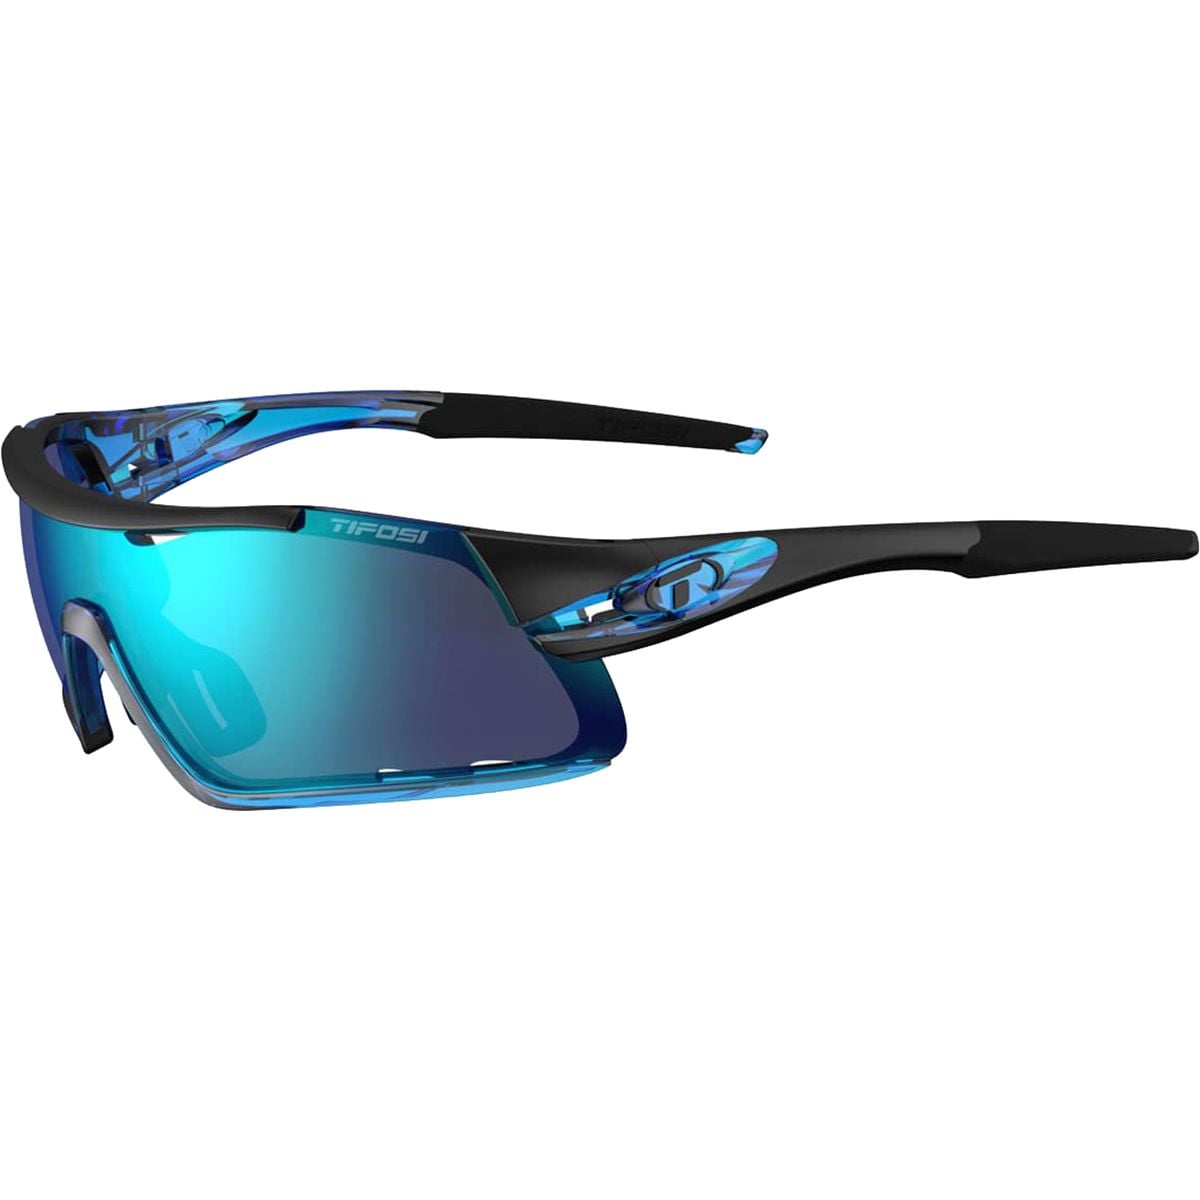 Давос солнцезащитные очки Tifosi Optics, цвет clarion blue/ac red/clear-crystal blue